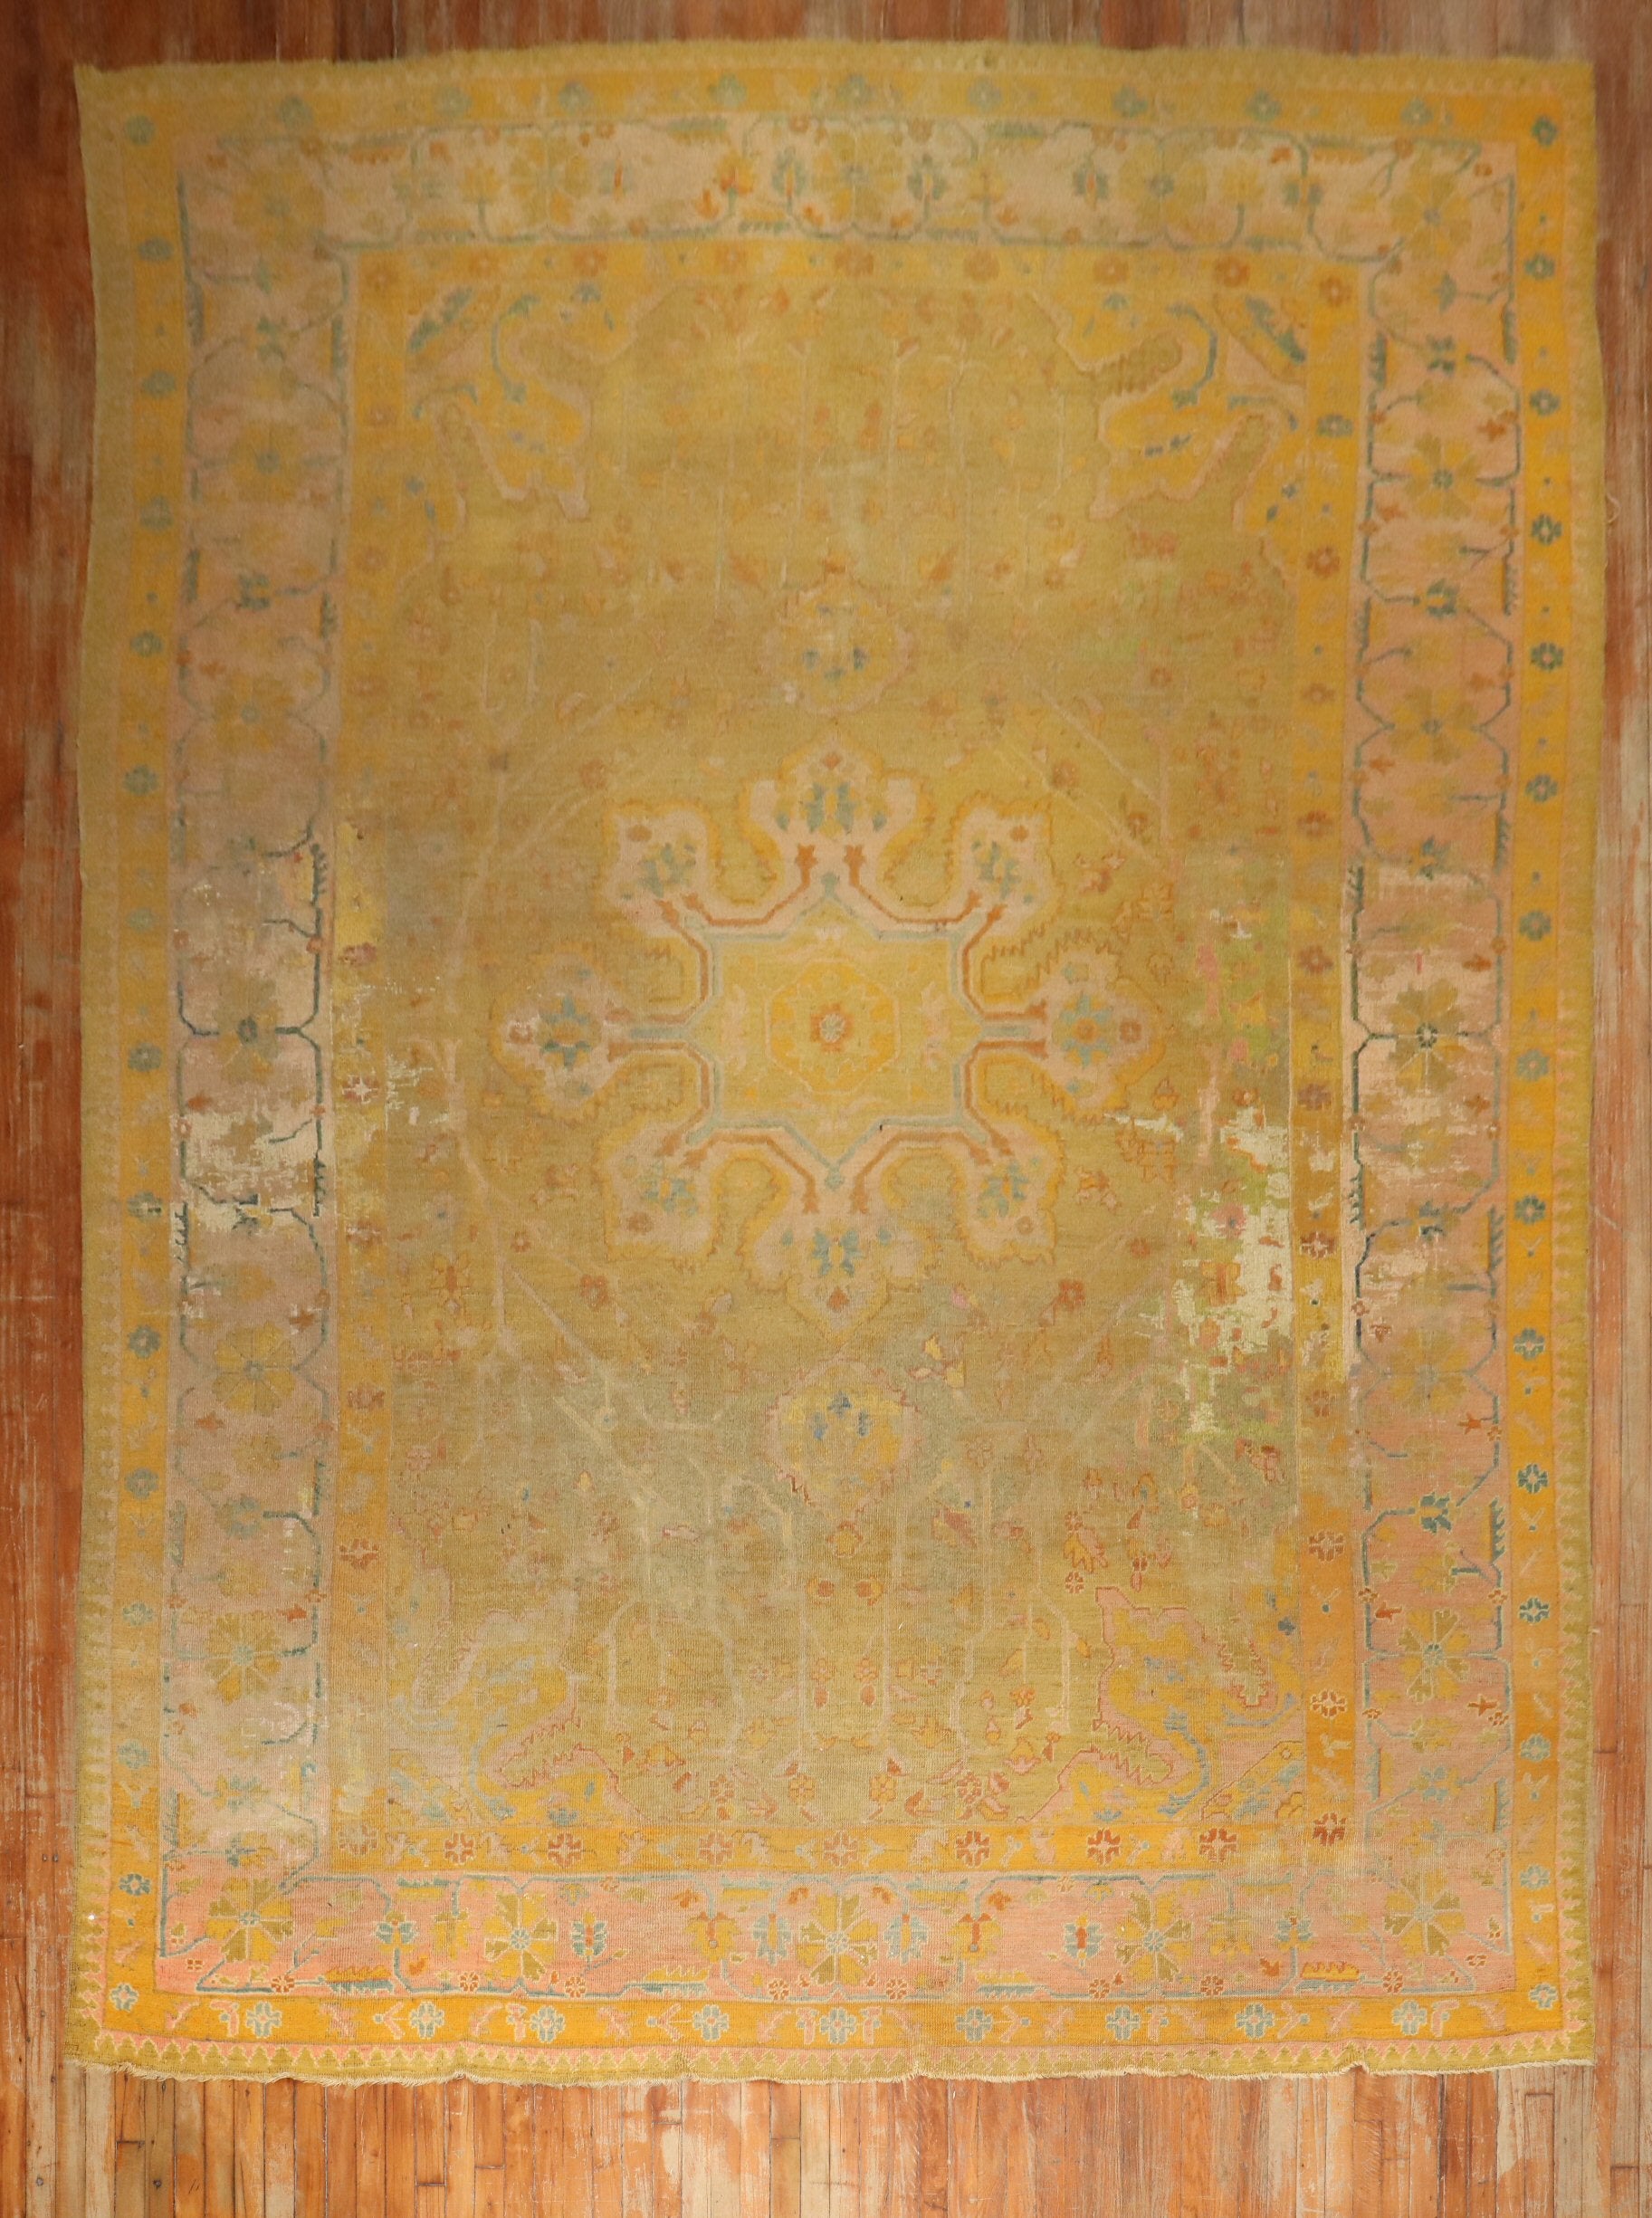 Late 19th Century Antique Turkish Distressed Oushak Rug

Details
rug no.	j3375
size	9' 9